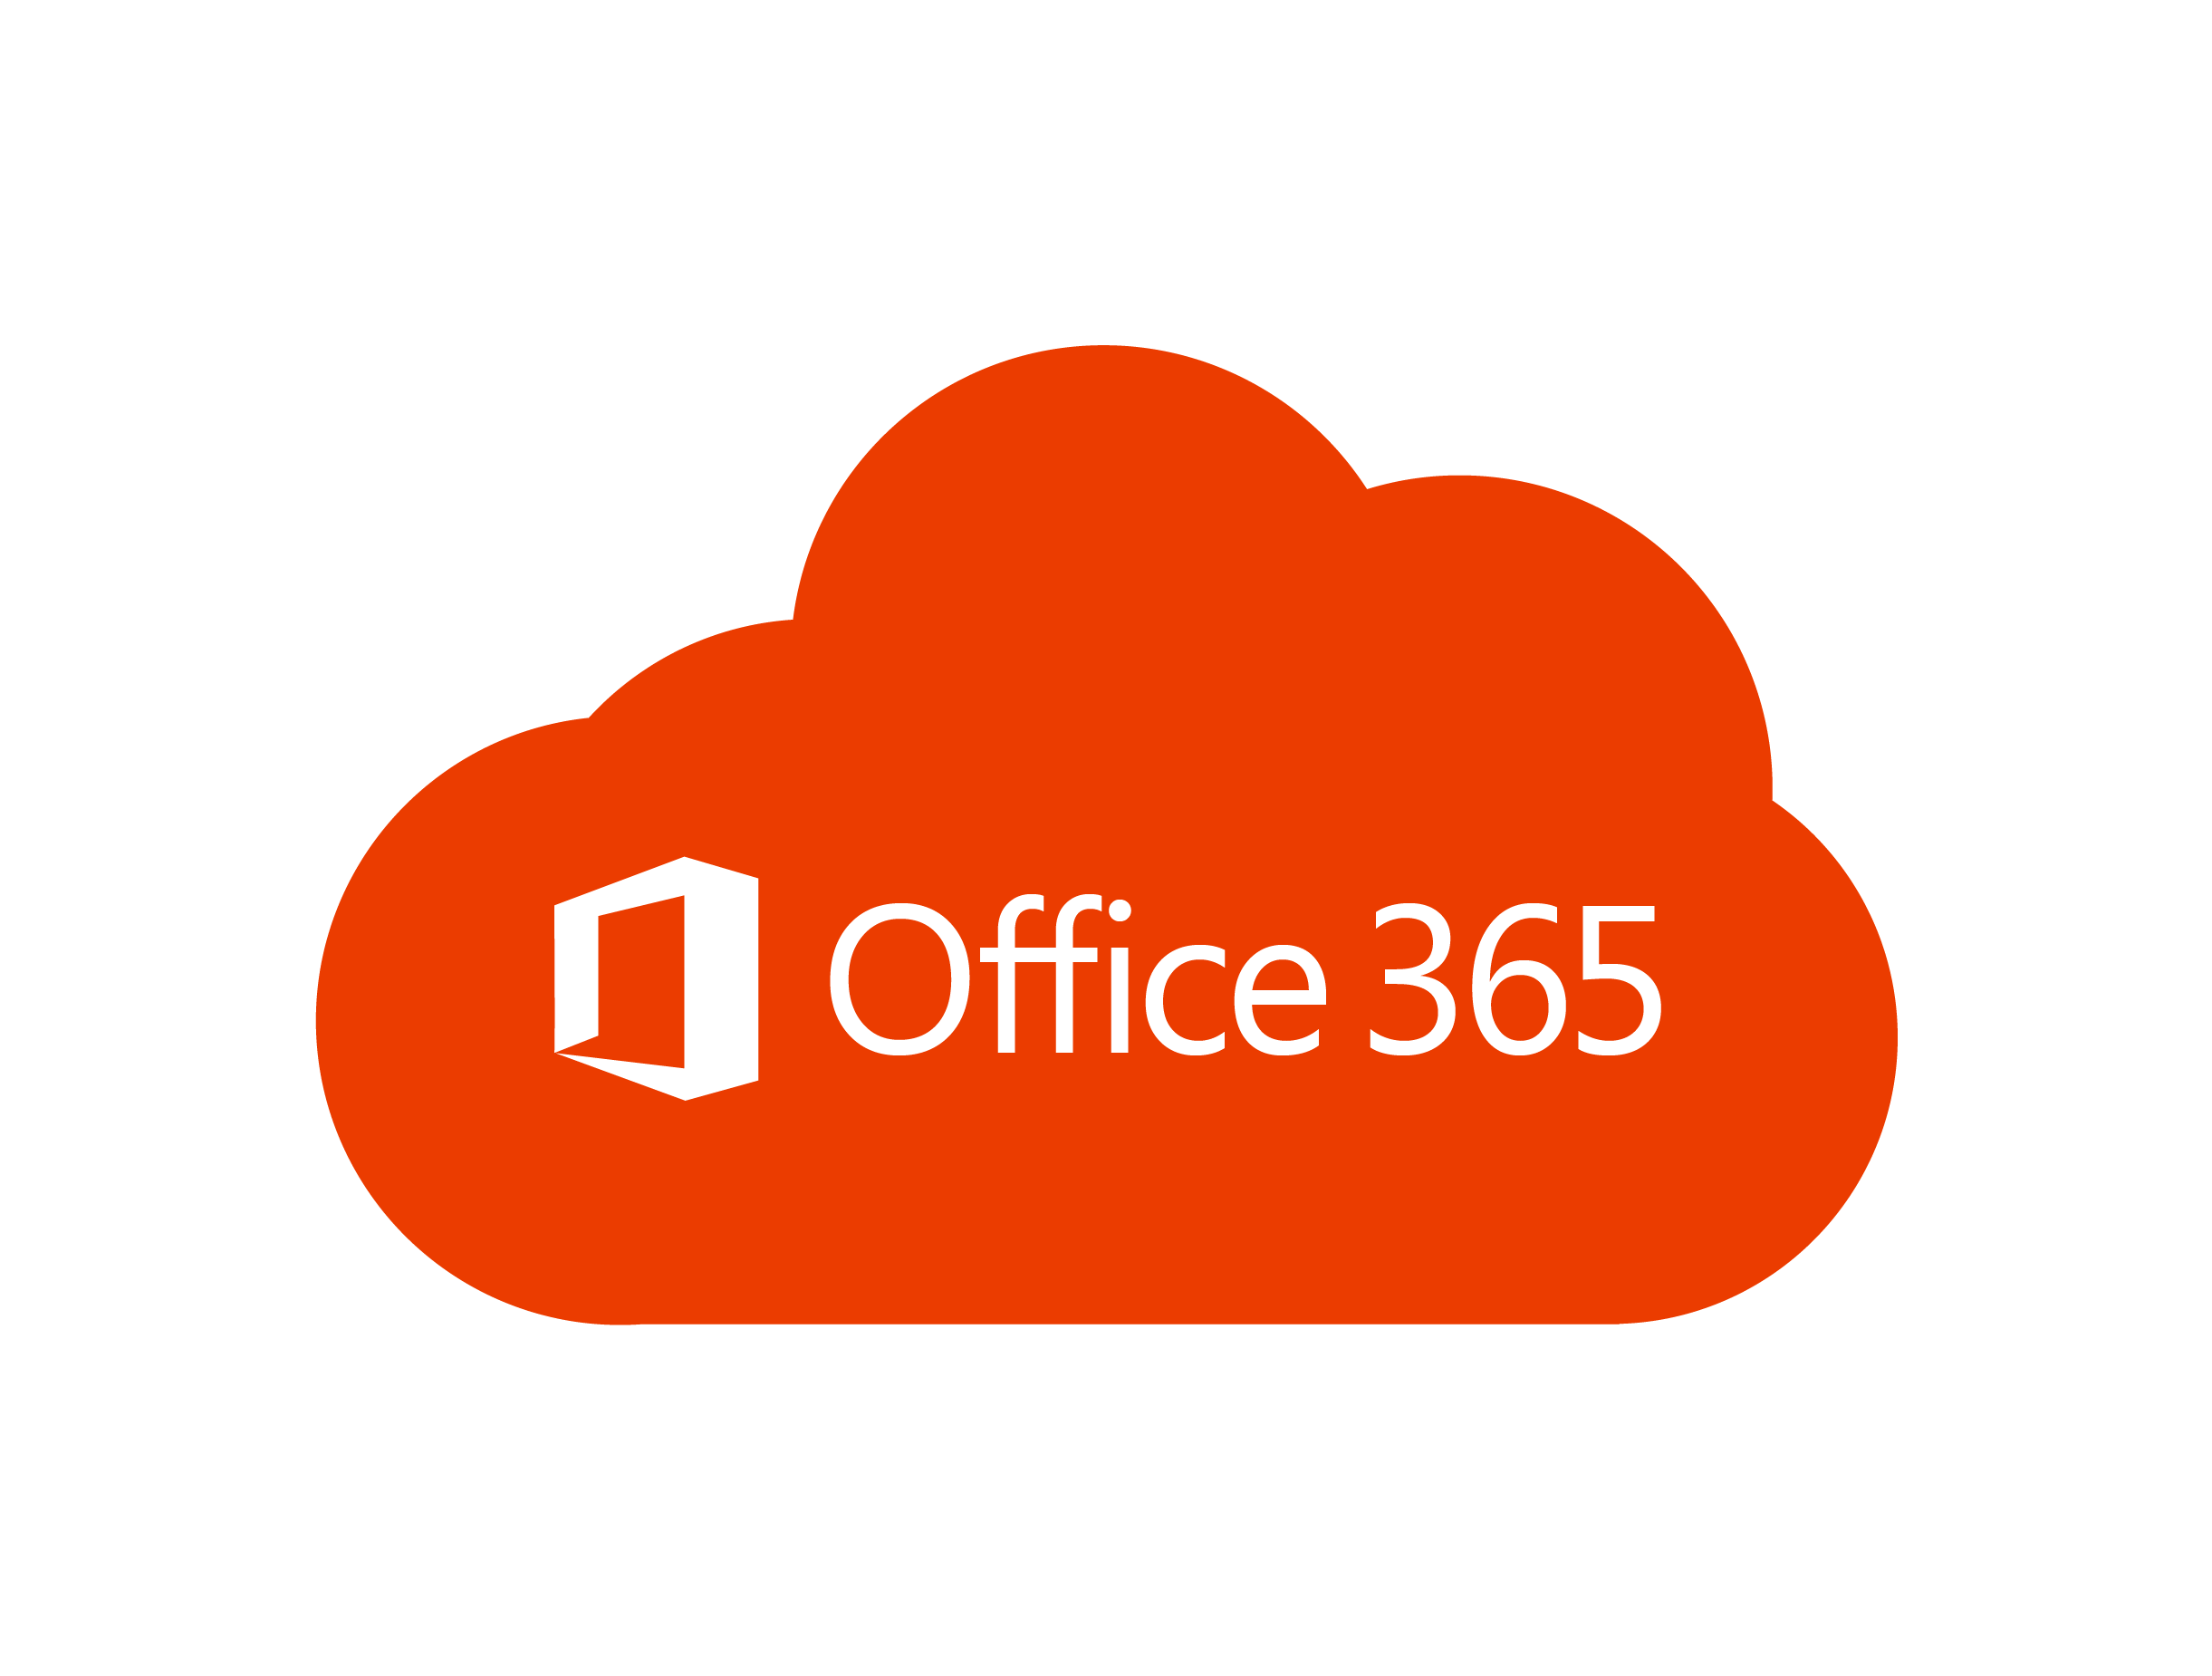 Microsoft office service. Microsoft Office. Microsoft Office ICO.